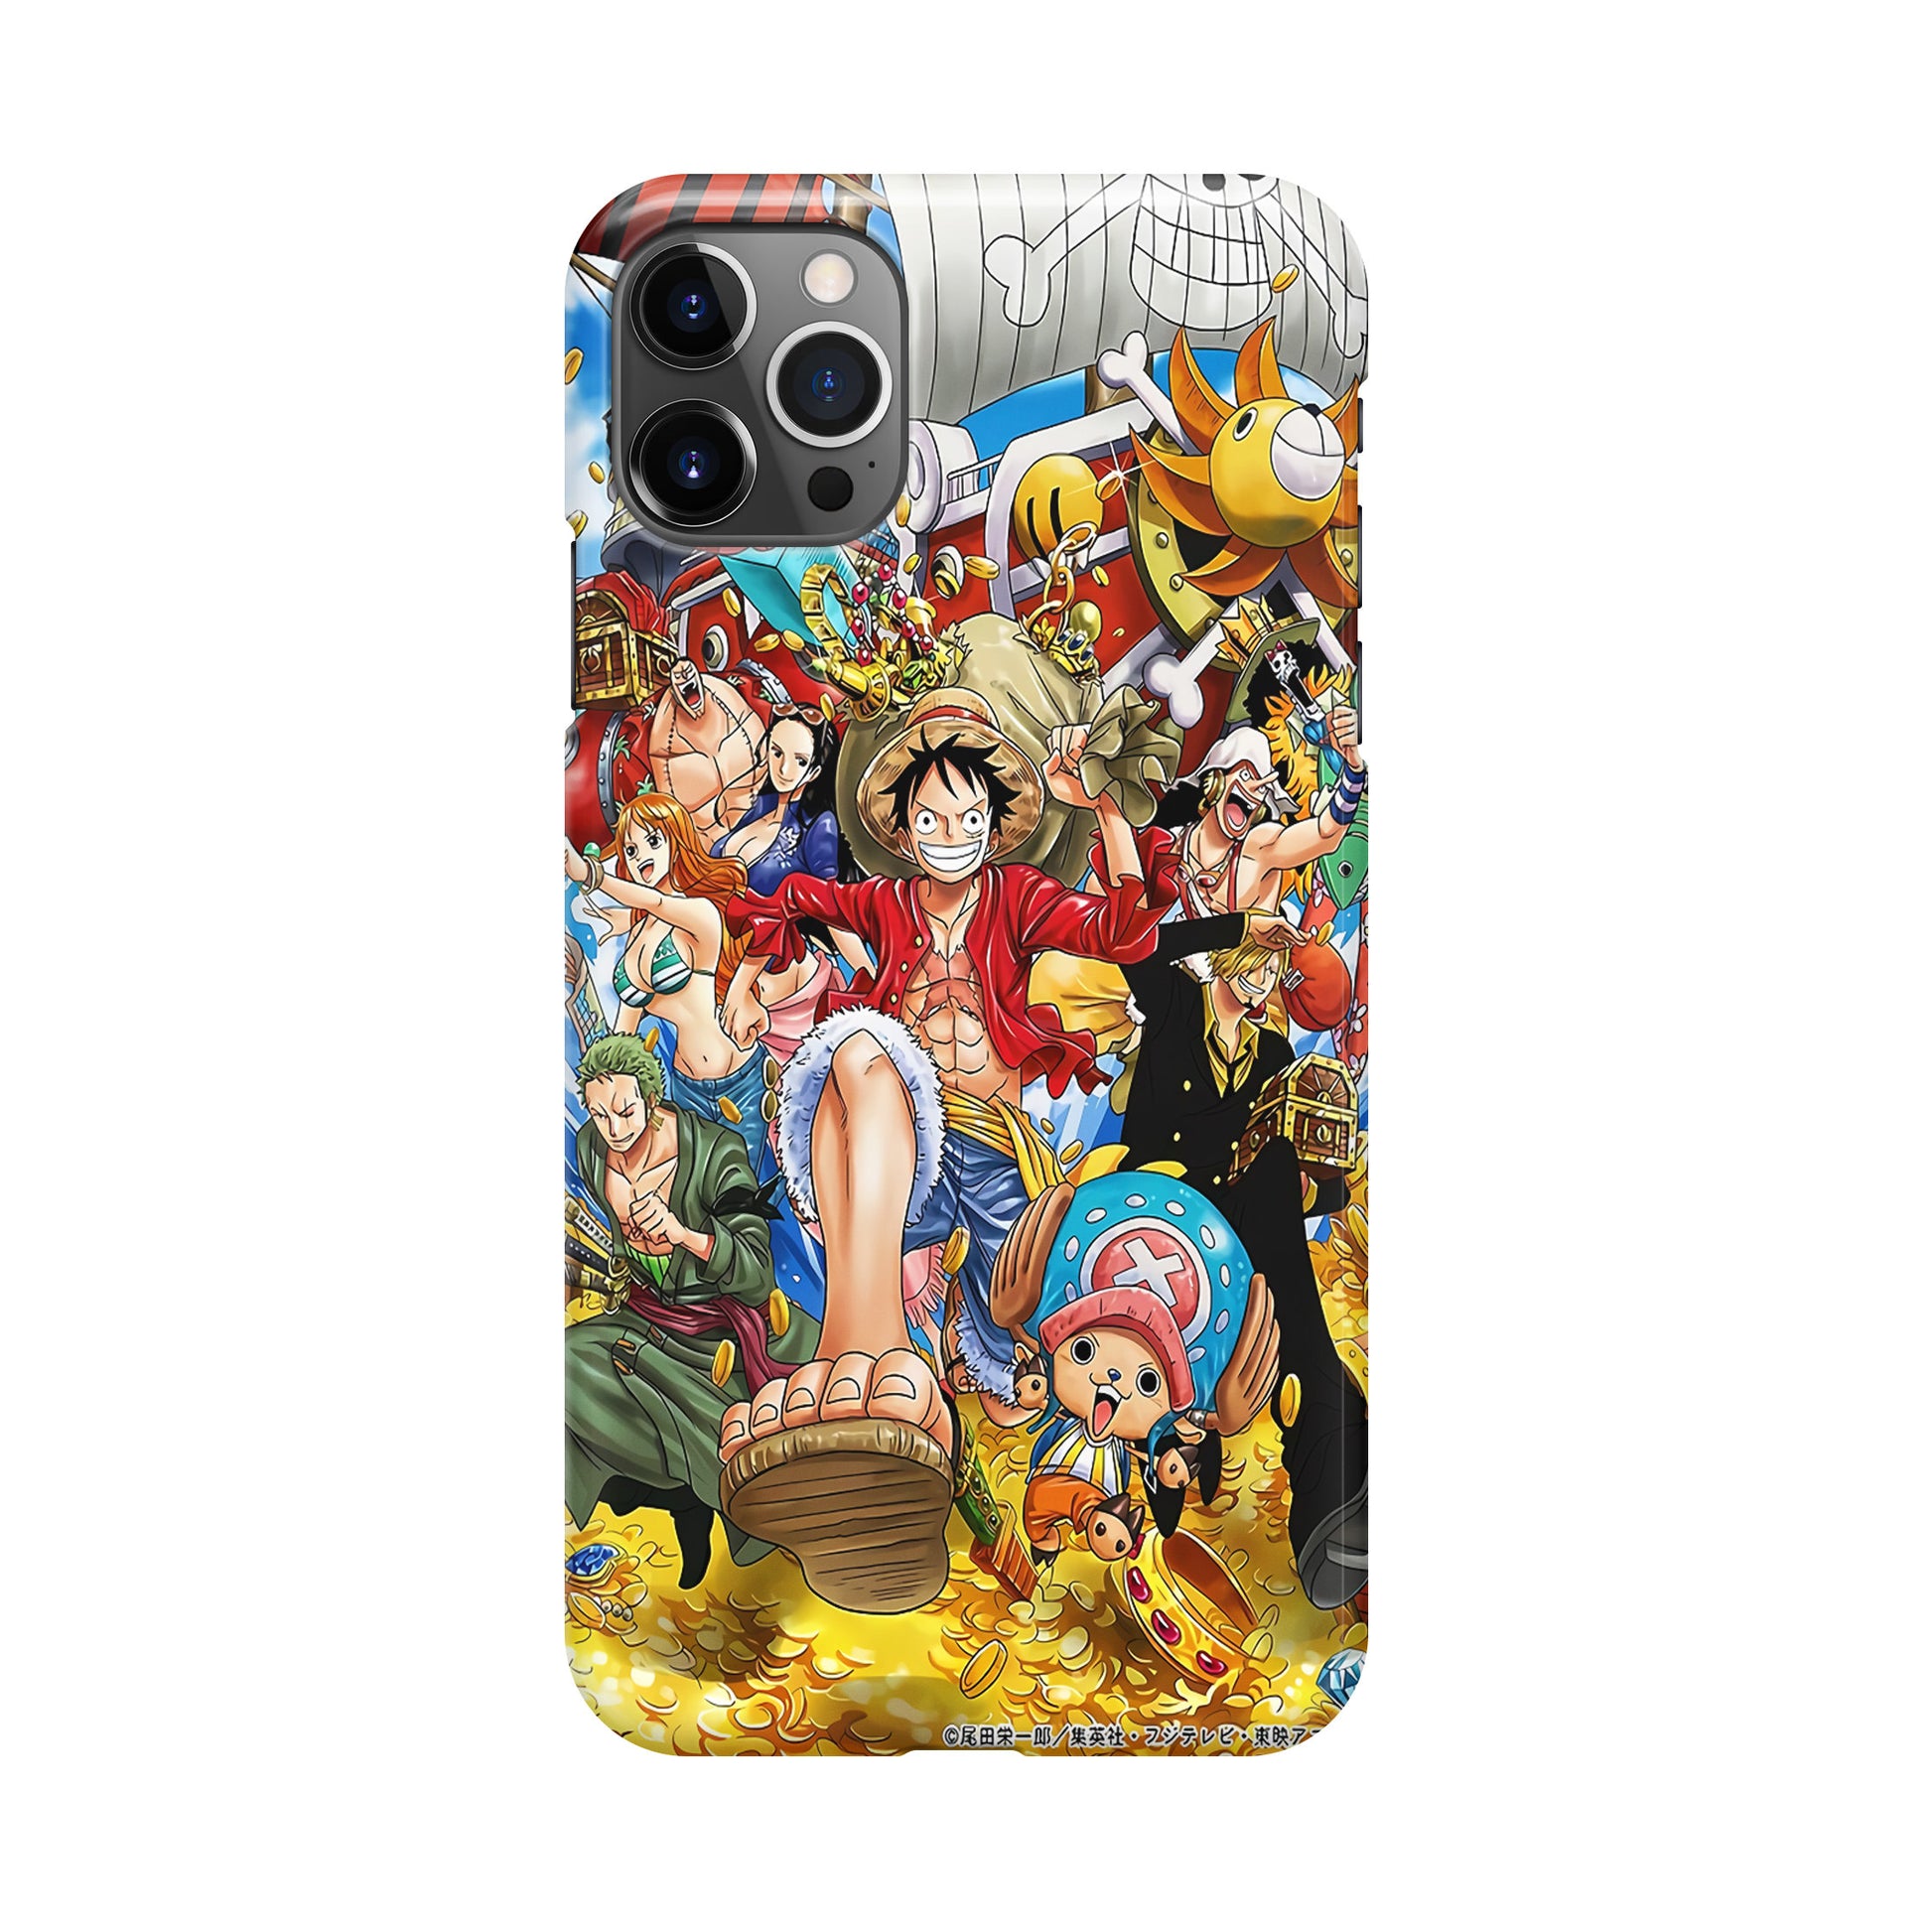 Mugiwara Crew One Piece iPhone 12 Pro Max Case